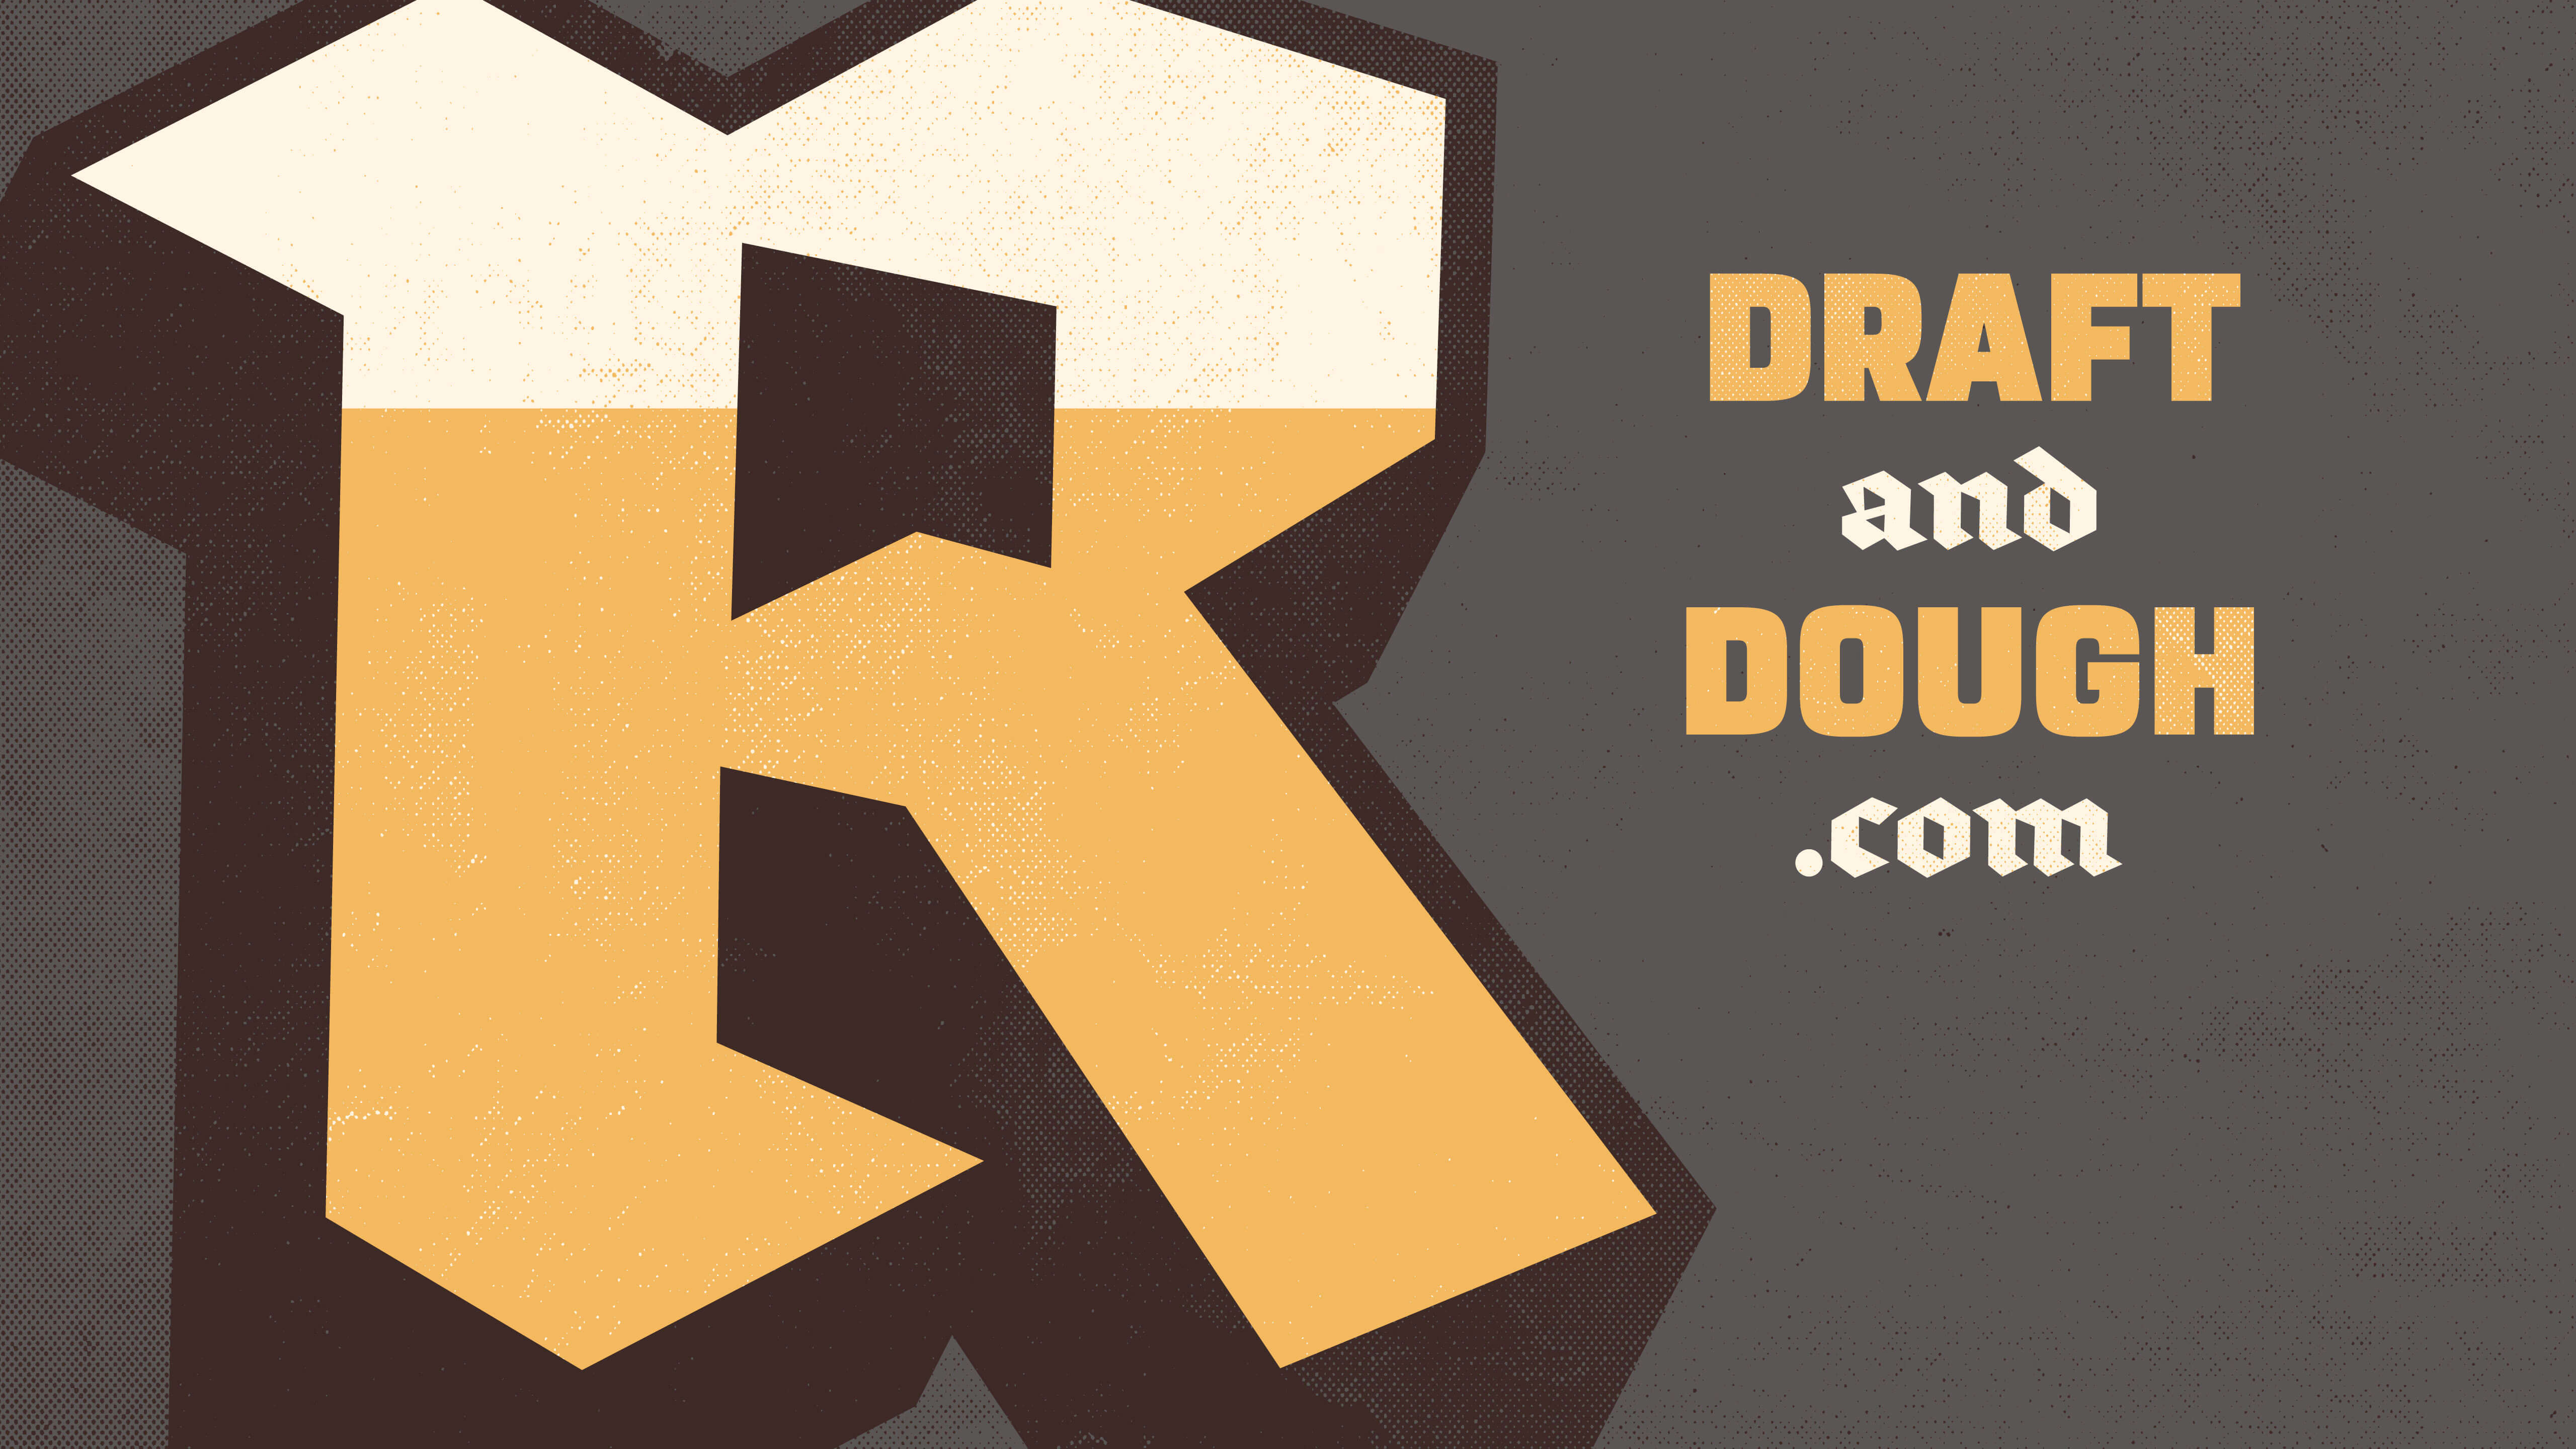 Rafters Draft & Dough - Branding